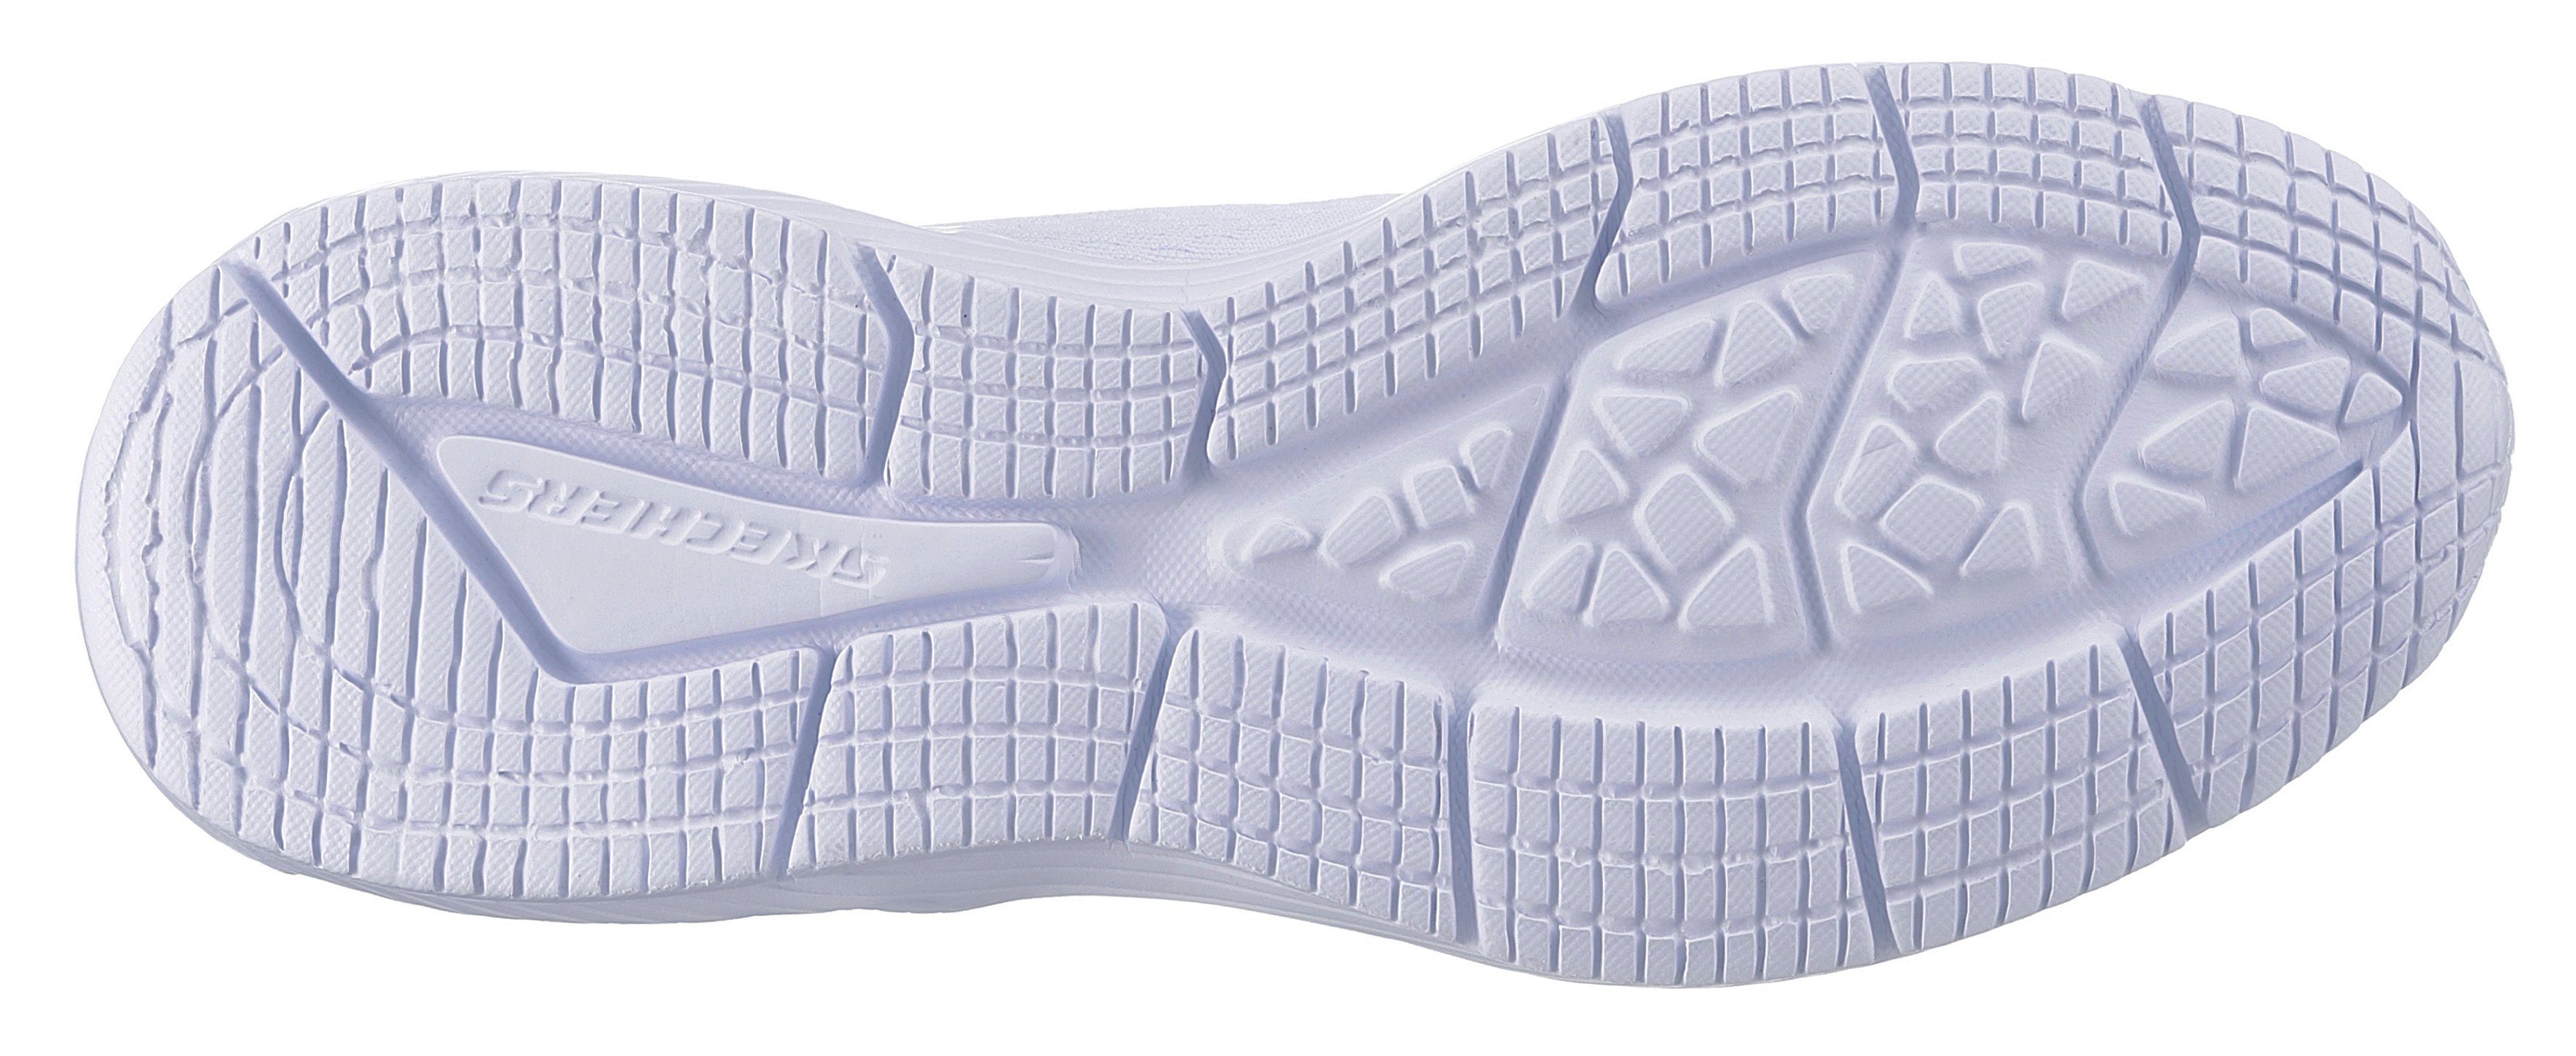 Air-Cooled Air Sneaker Memory Foam weiß Skechers mit Dyna